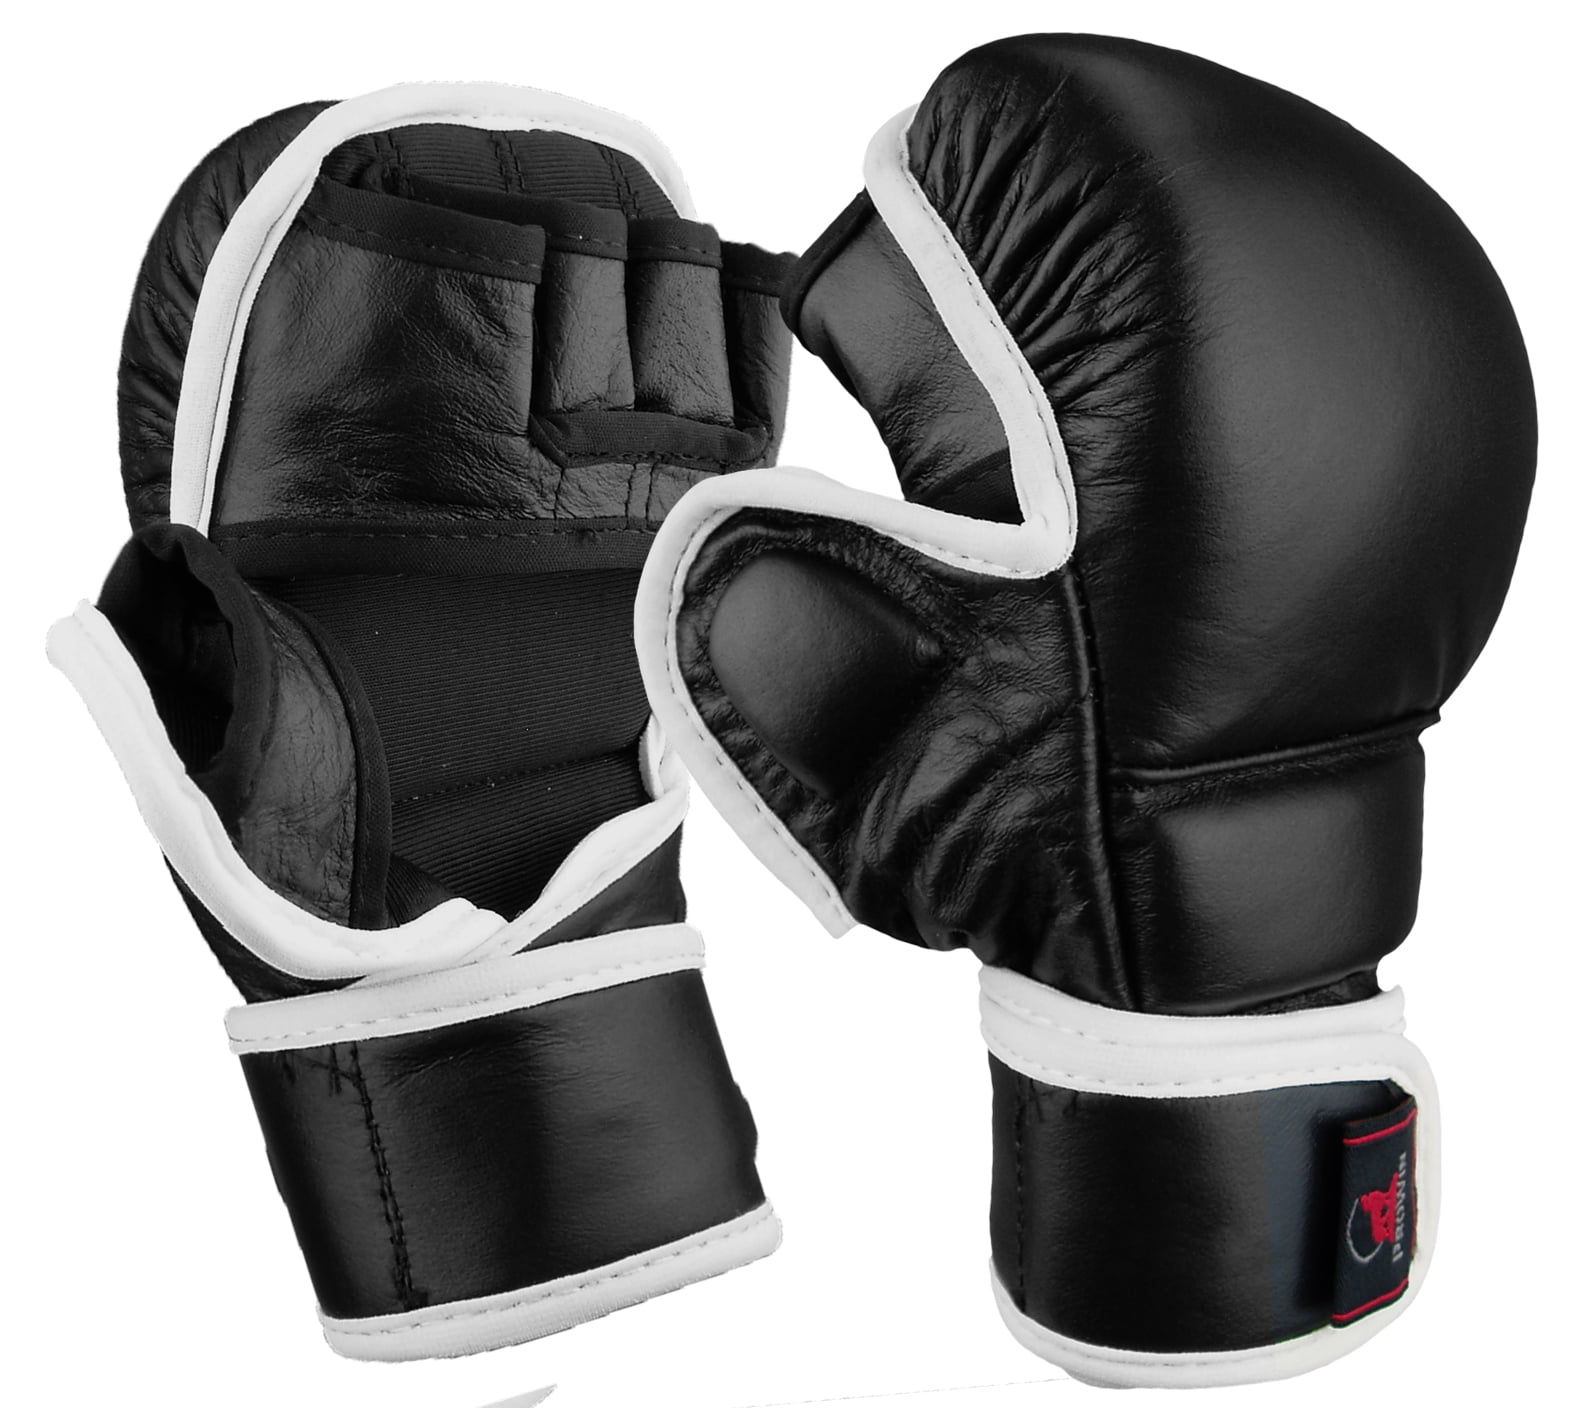 Krav Maga Black Leather Grappling Gloves Striking Training Martial Arts Fighting 